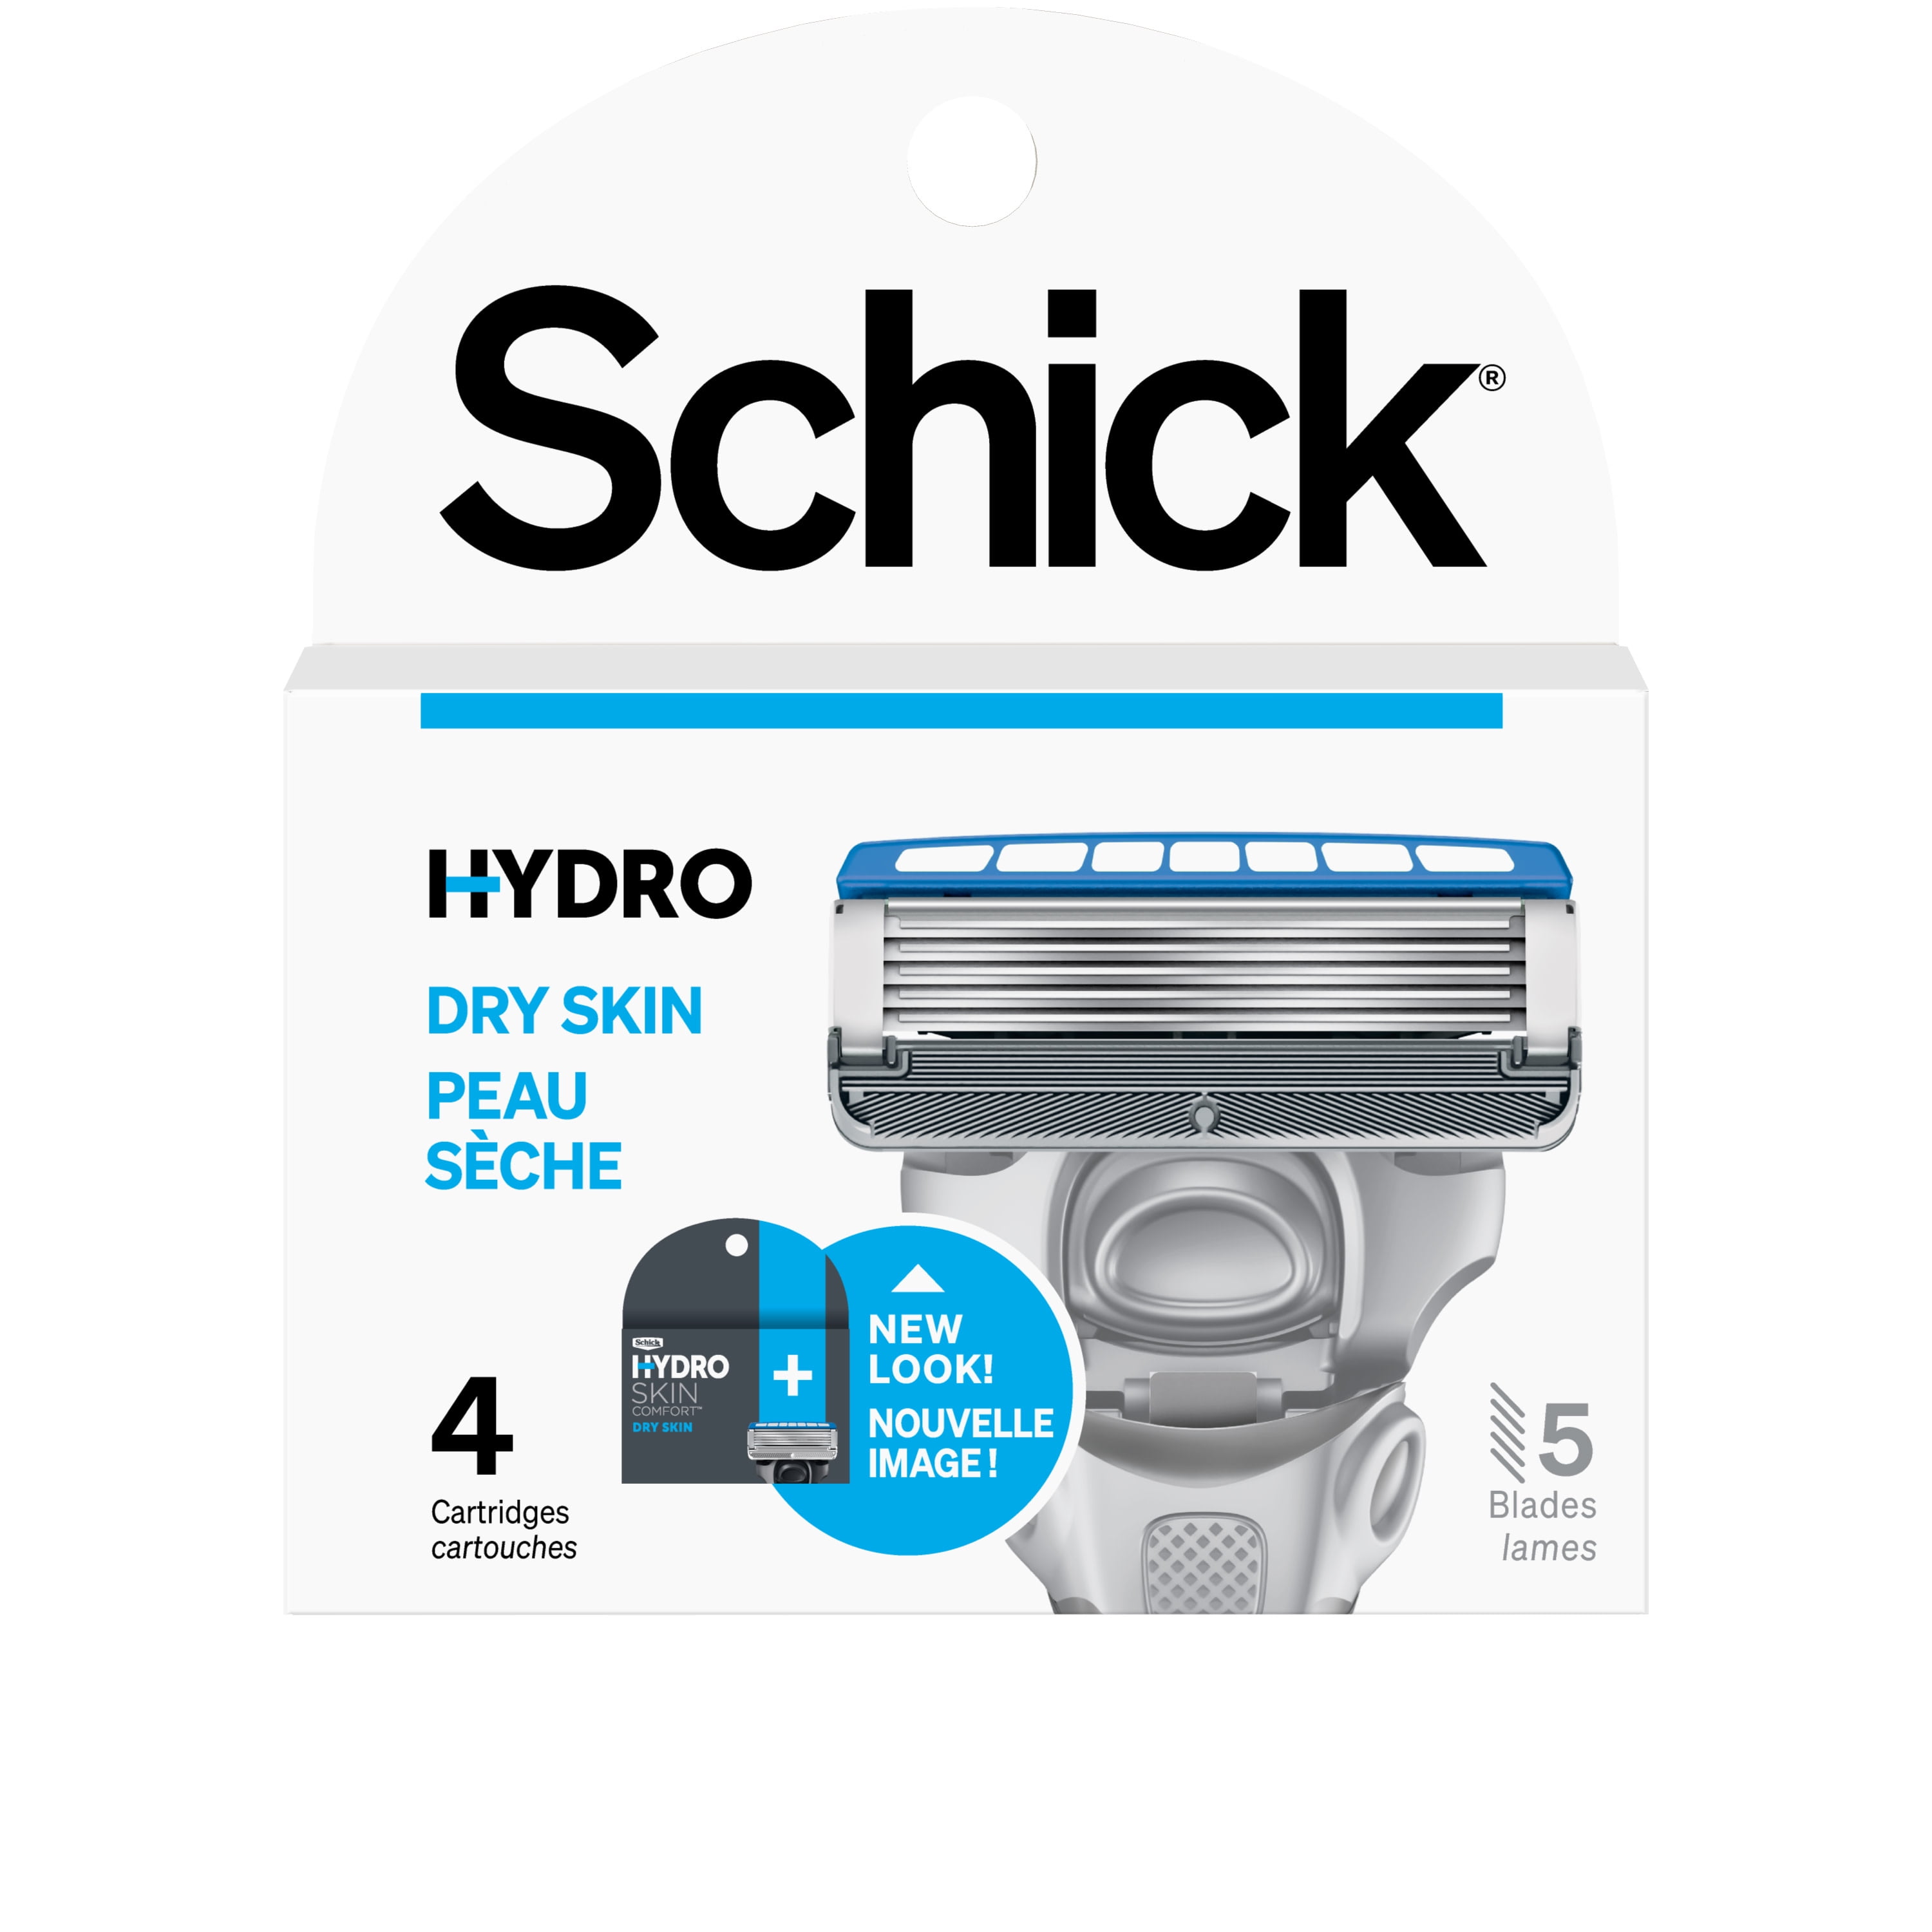 16 Schick Hydro3 Razor Blades Shaver Refill Cartridges